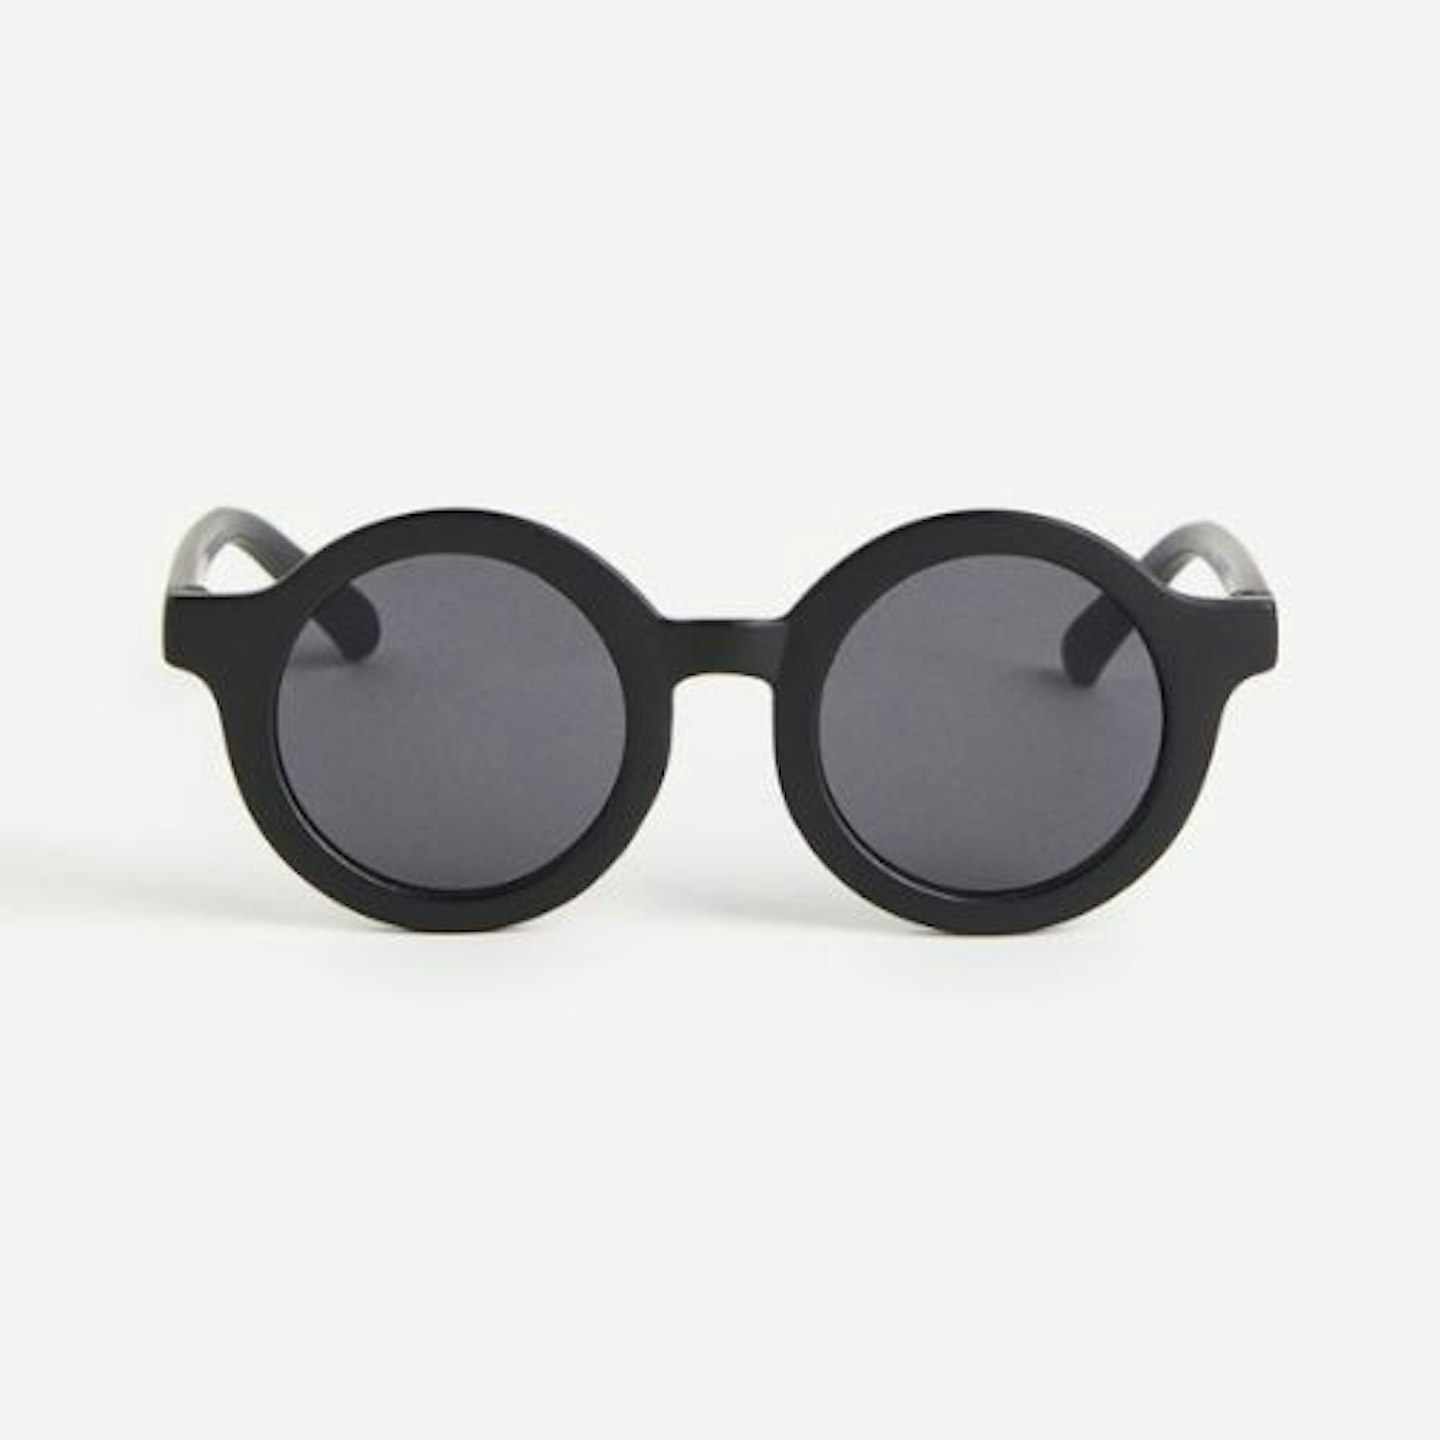 Best sunglasses for kids': H&M - Round sunglasses 